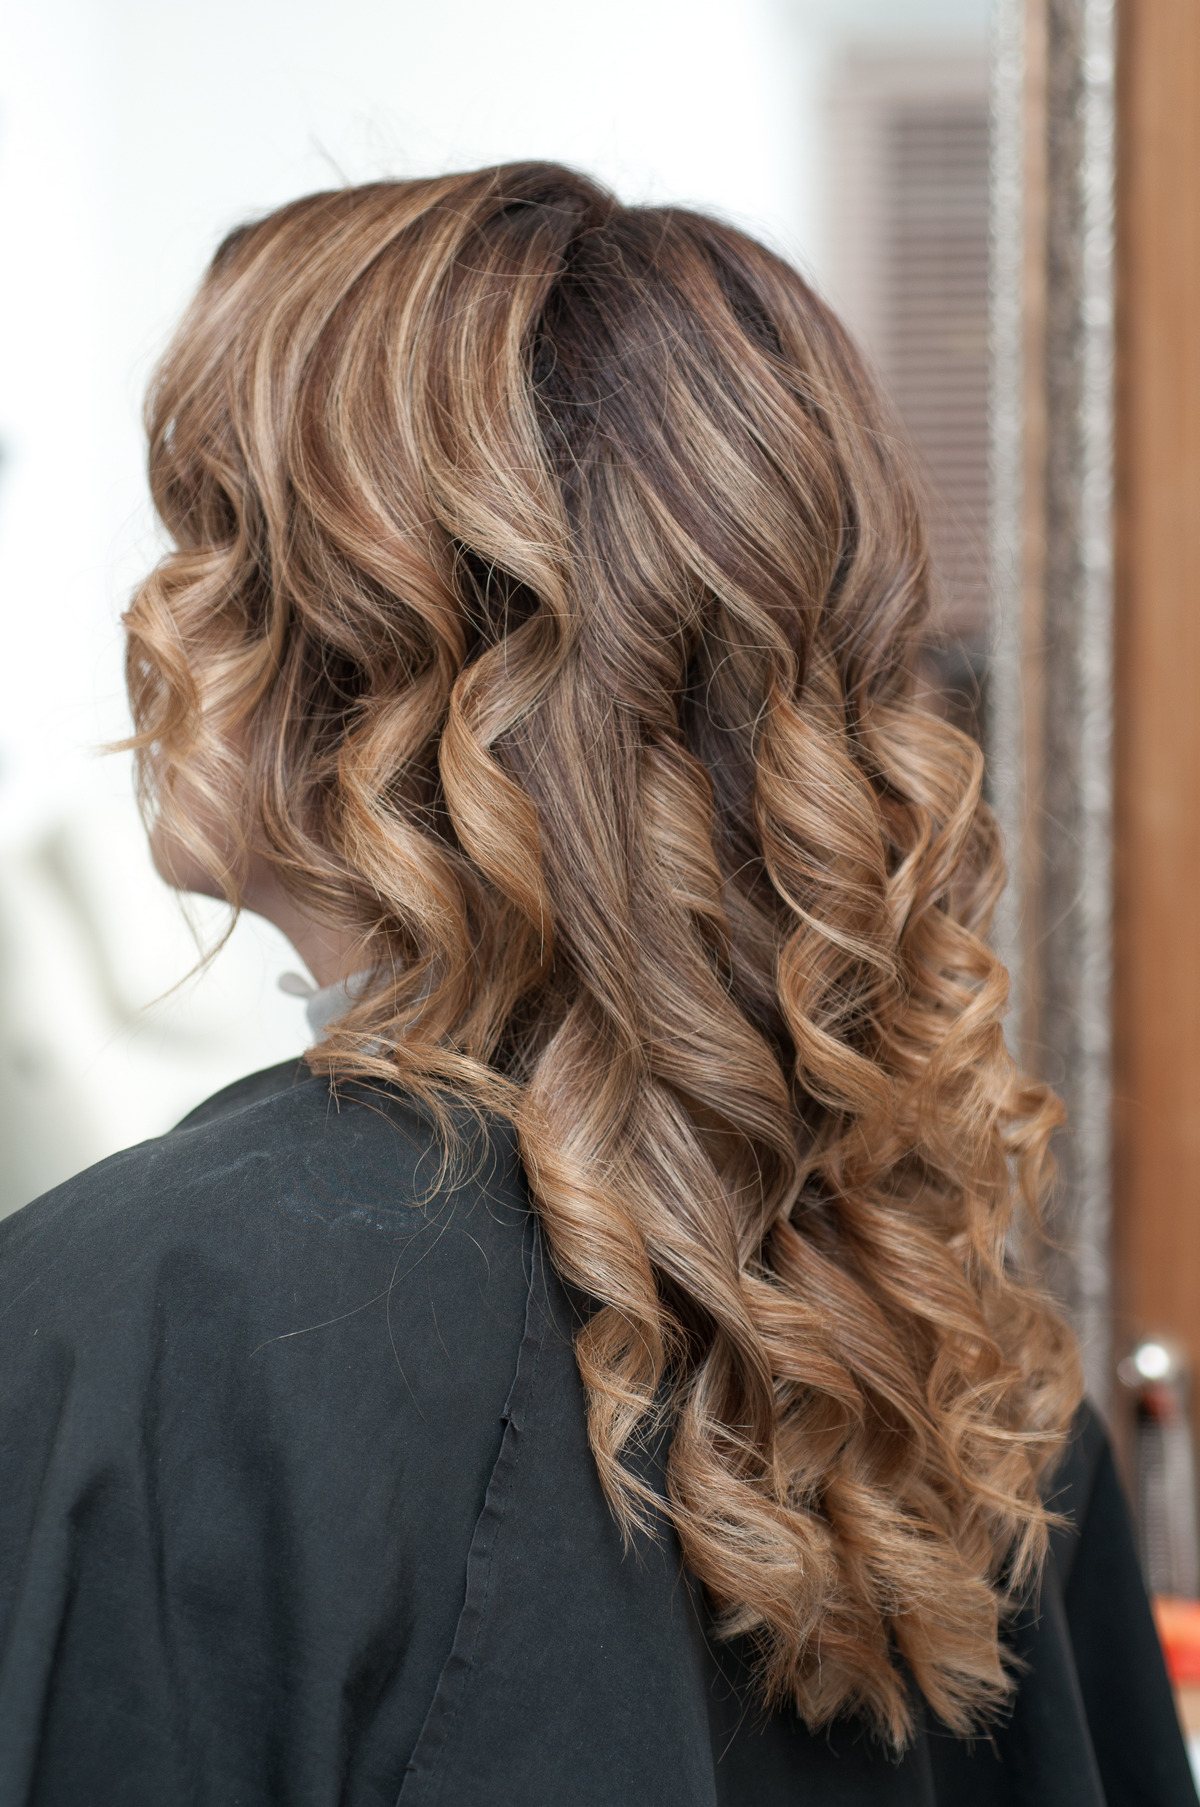 Hairstyle female curls on dark hair close up